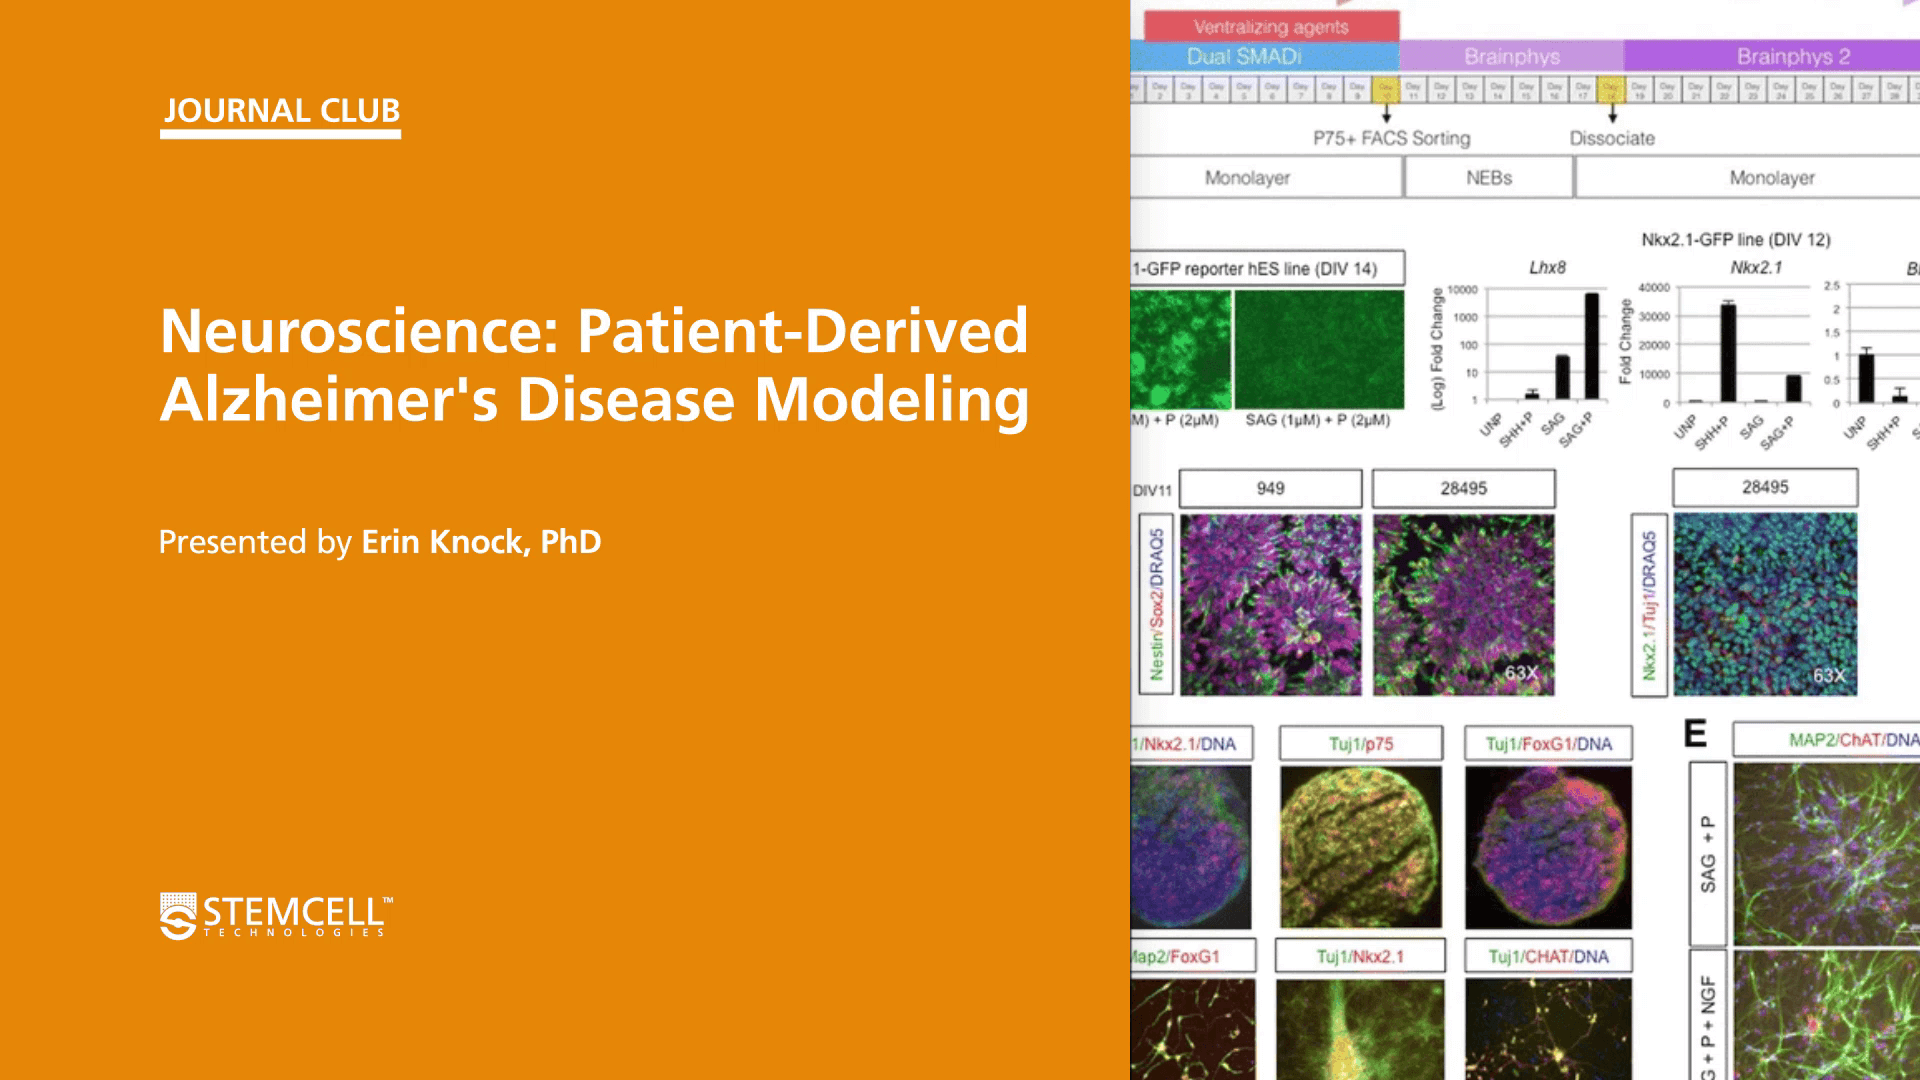 STEMCELL Journal Club: Patient-Derived Alzheimer’s Disease Modeling